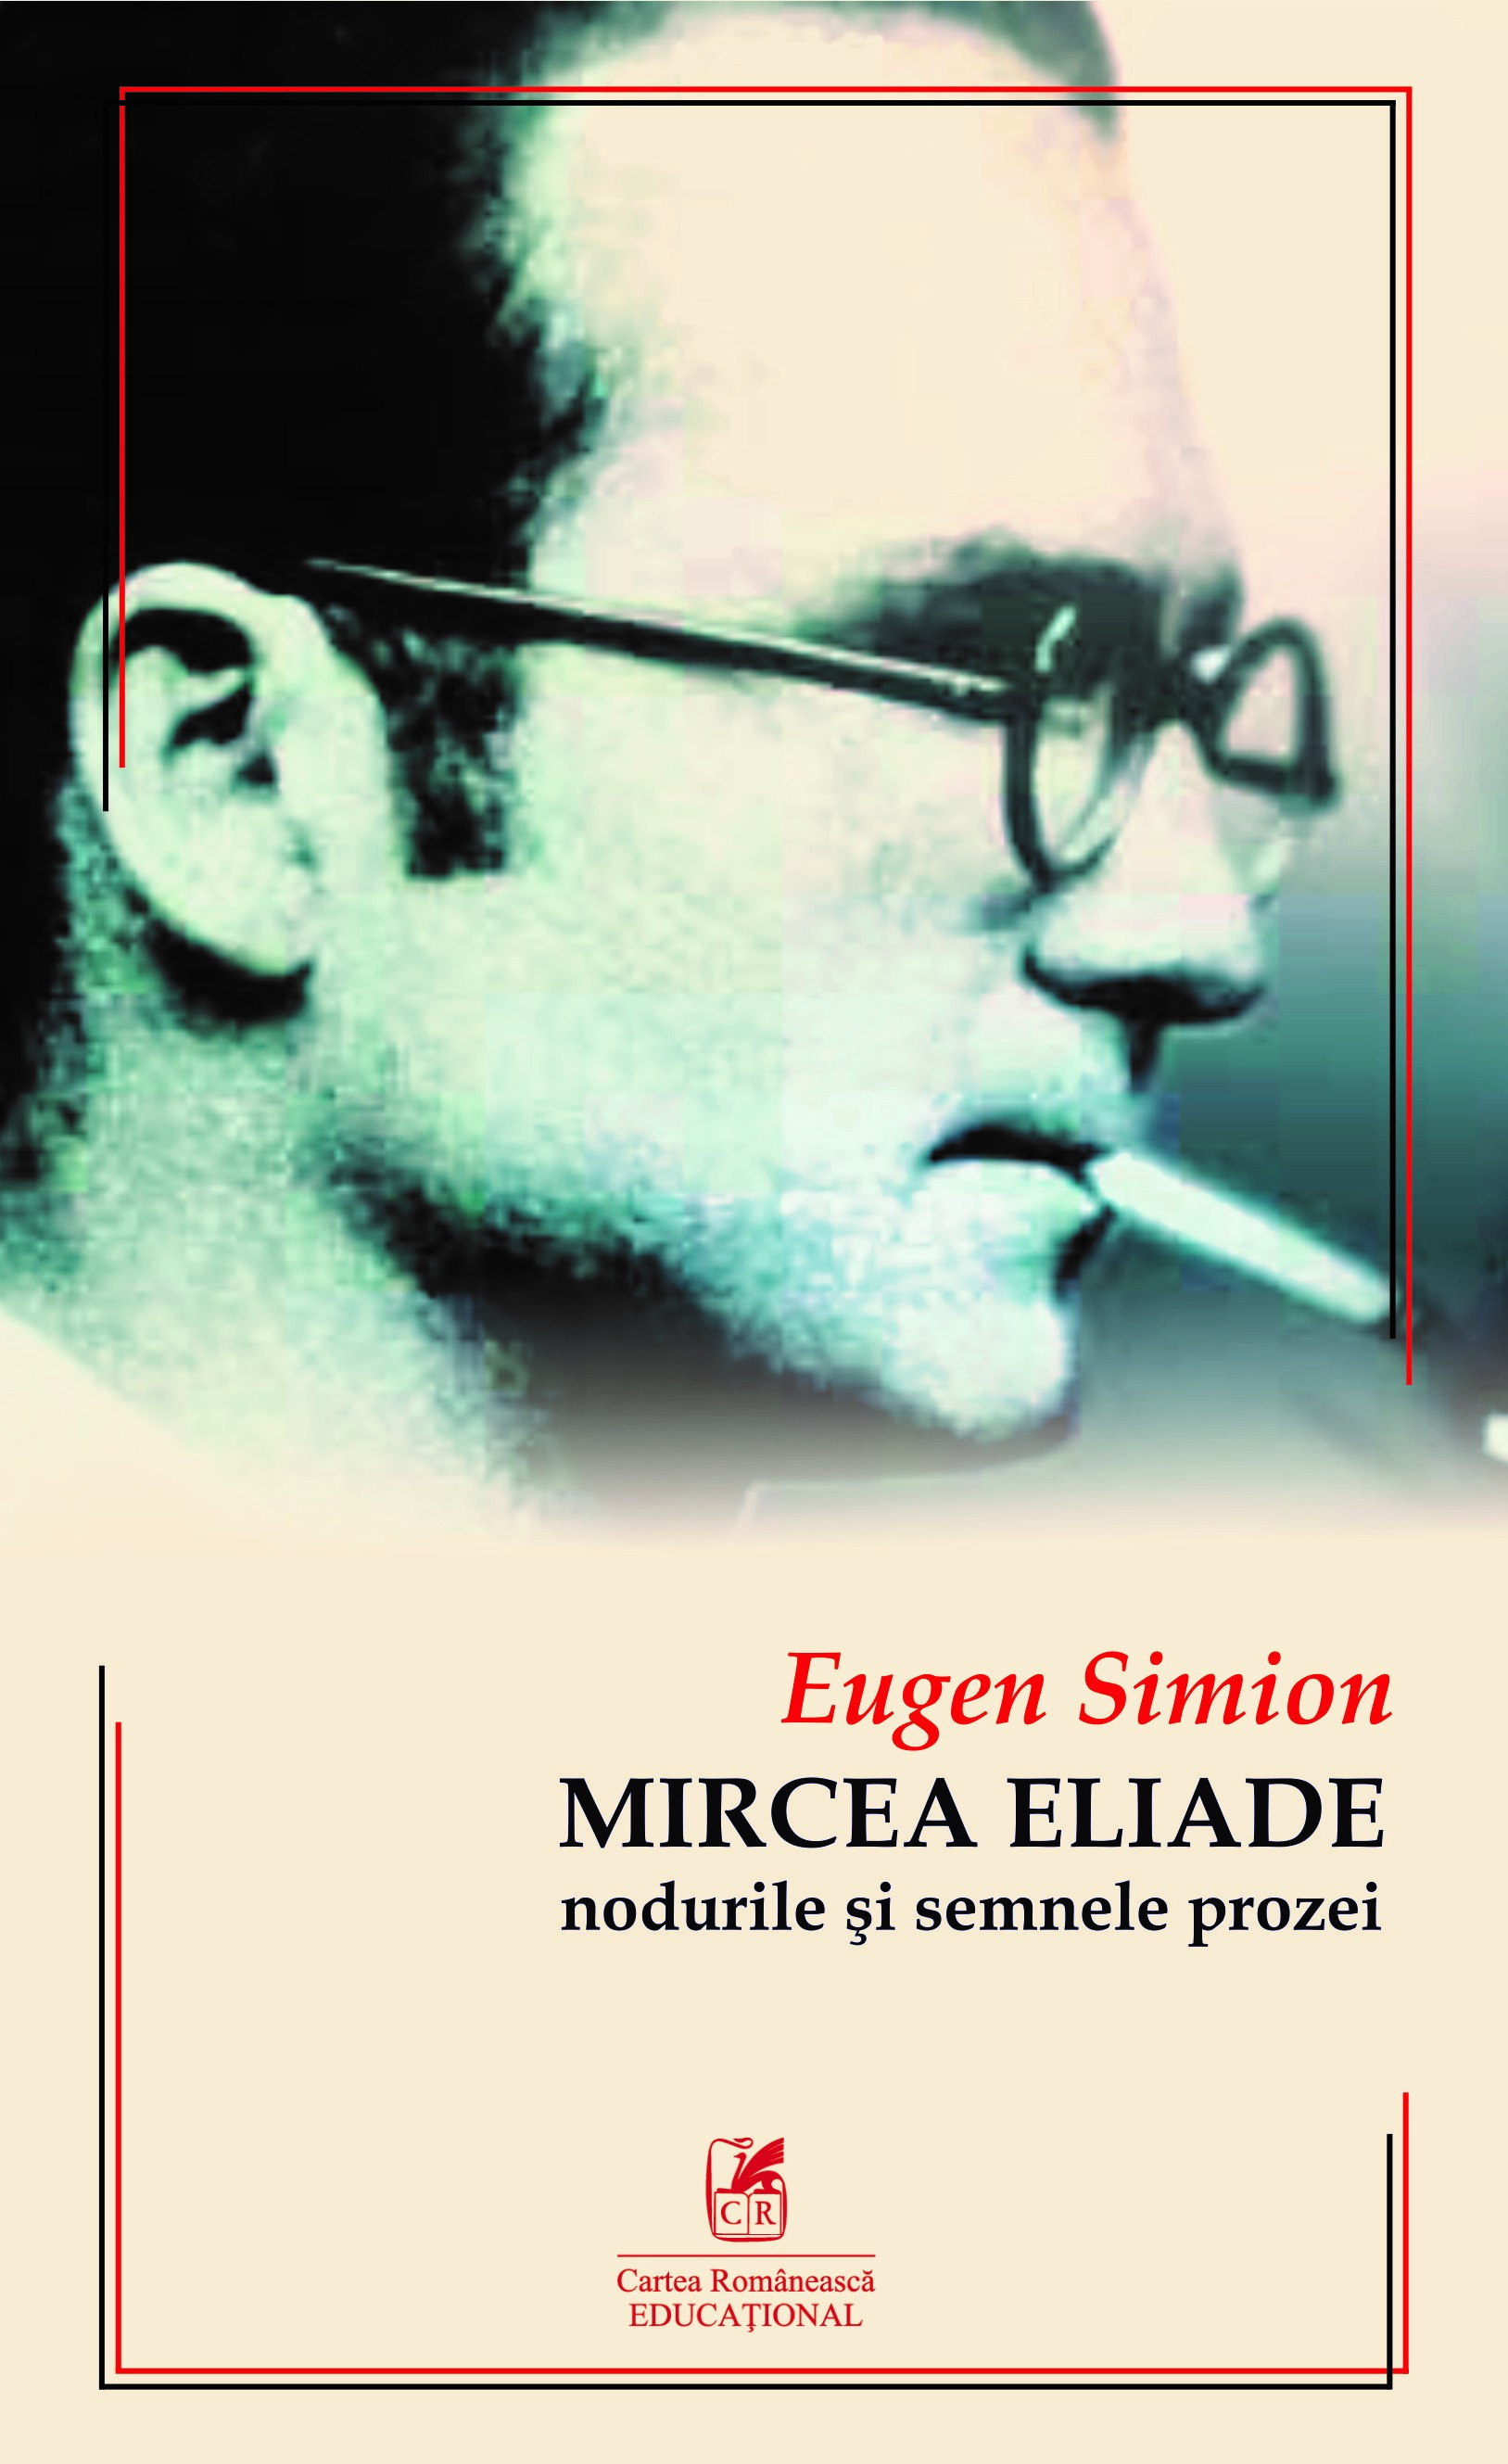 Mircea Eliade – Nodurile si semnele prozei | Eugen Simion Carte Romaneasca Educational poza bestsellers.ro